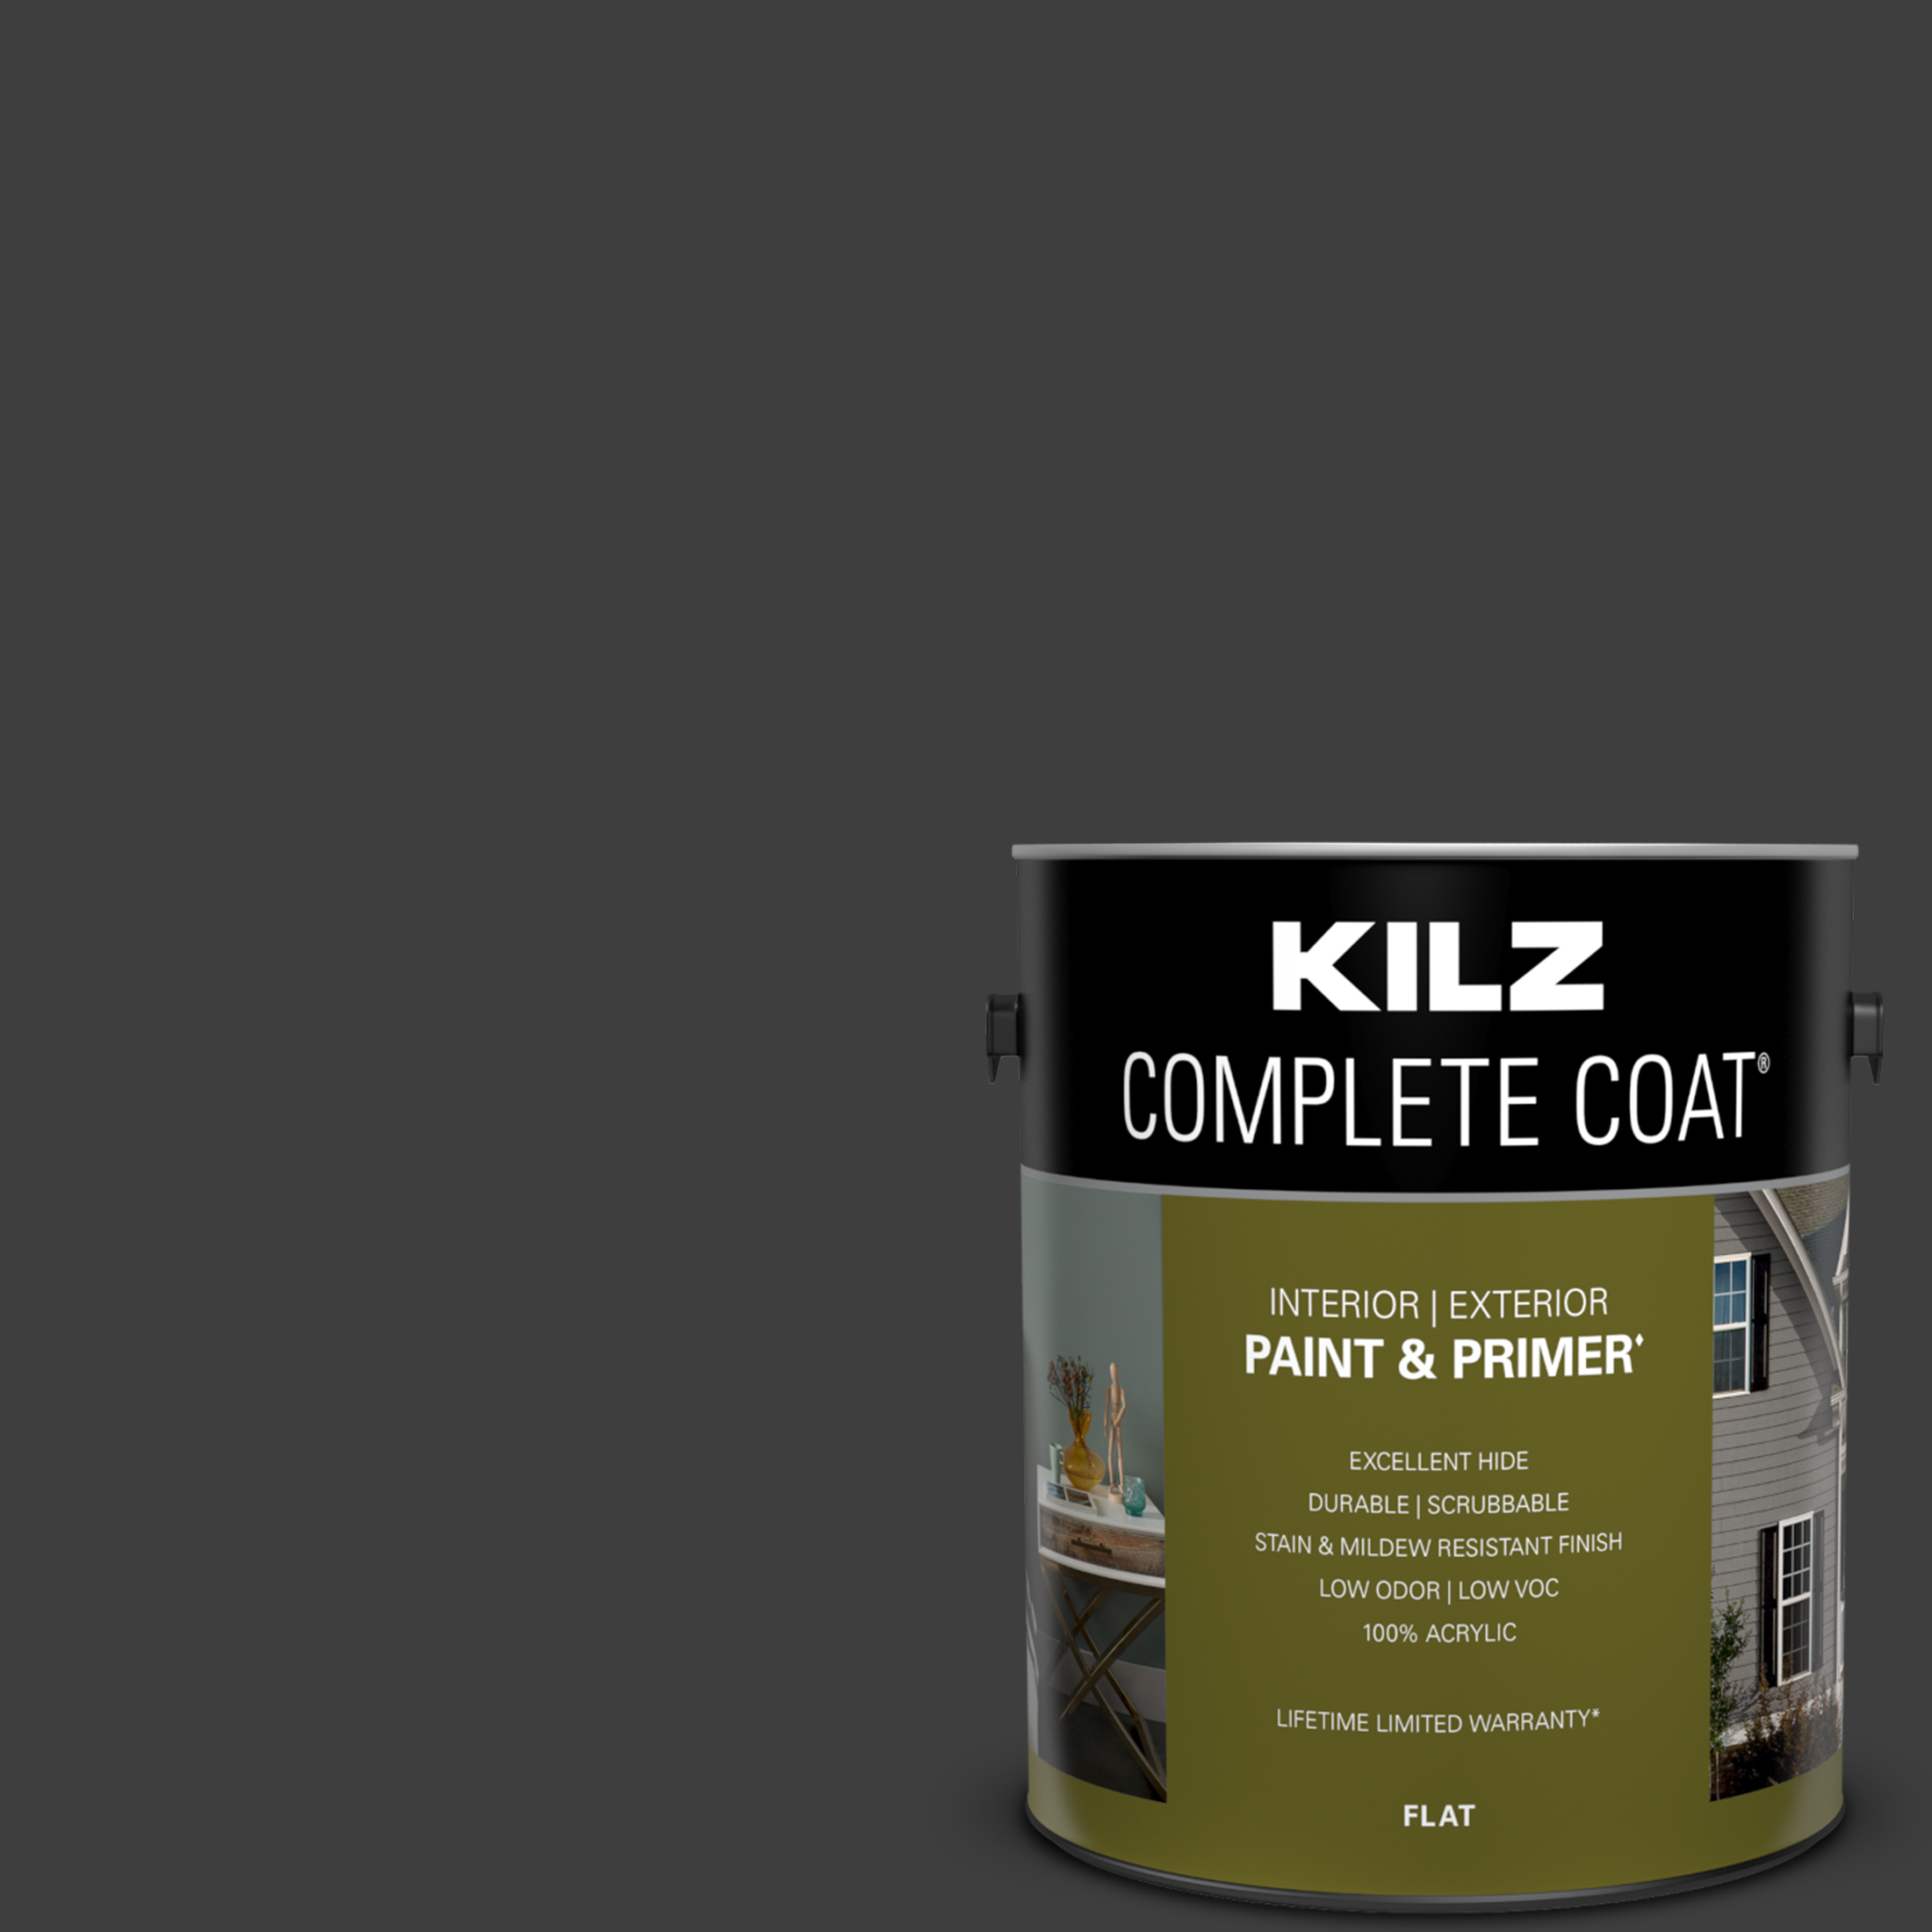 KILZ Complete Coat Paint & Primer, Interior/Exterior, Flat, Rebel, 1 Gallon - image 1 of 6